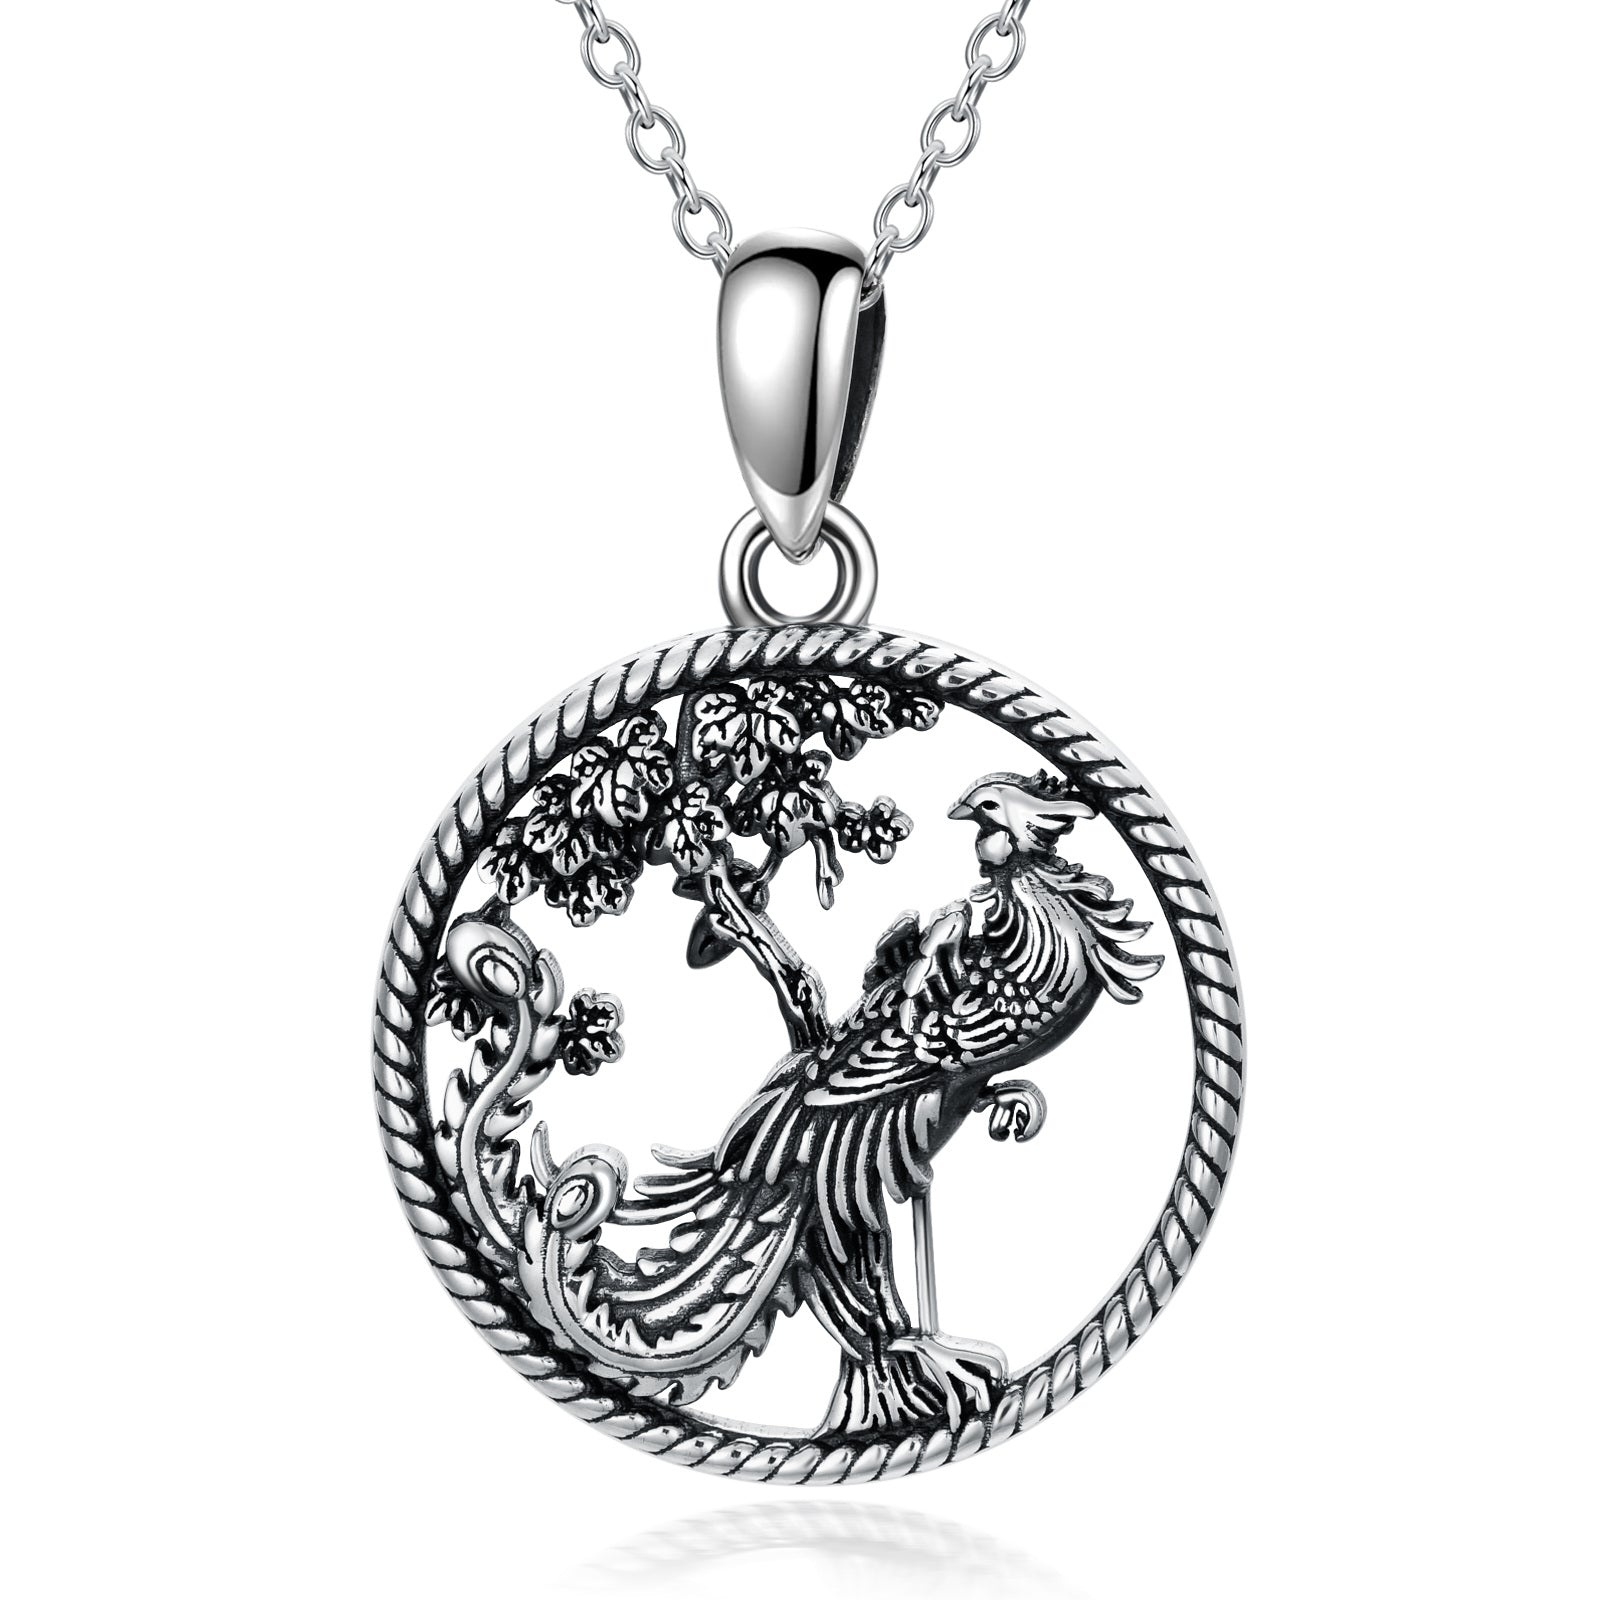 Phoenix Necklace 925 Sterling Silver Nirvana of Phoenix Firebird Pendant Jewelry Gifts for Women Girls